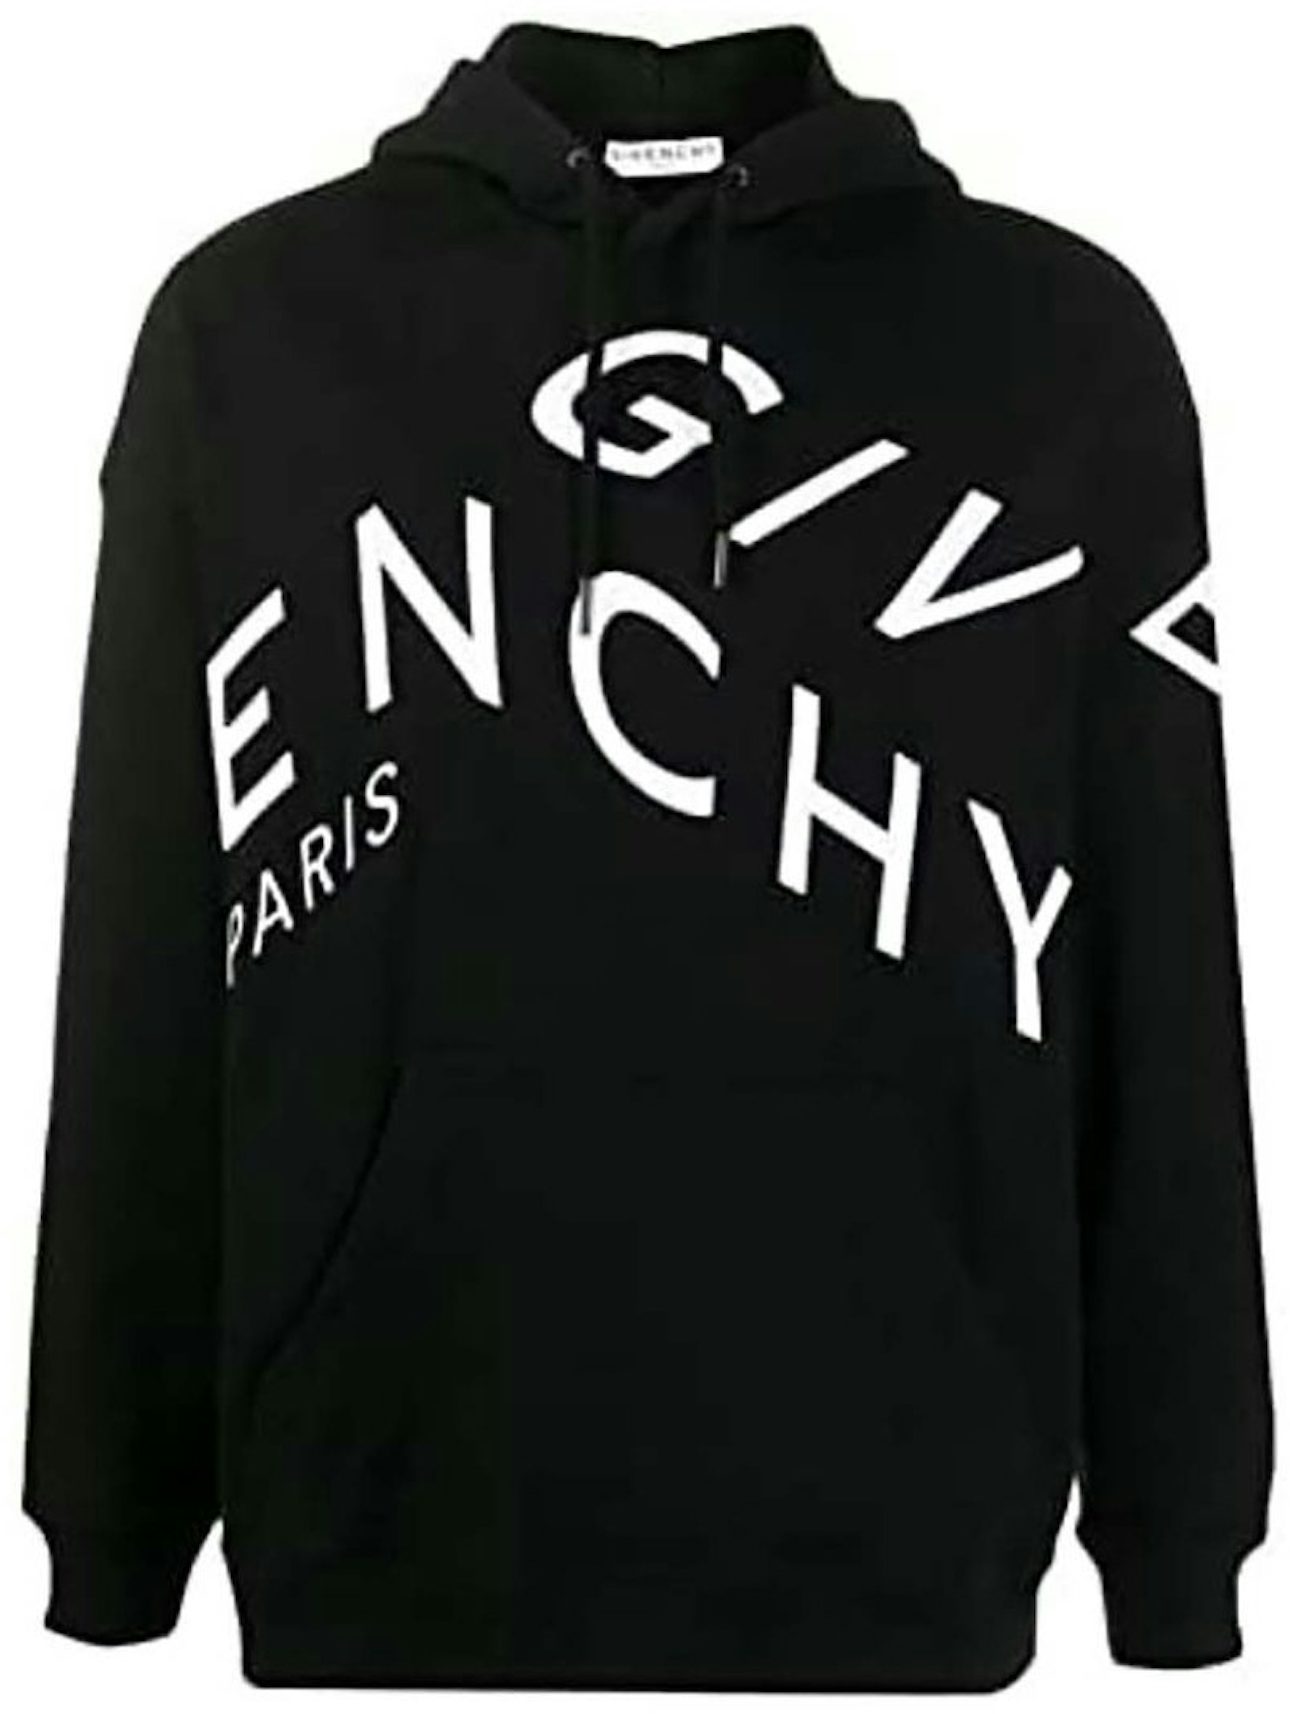 Givenchy - Josh Smith Distressed Printed Denim Jacket - Black Givenchy